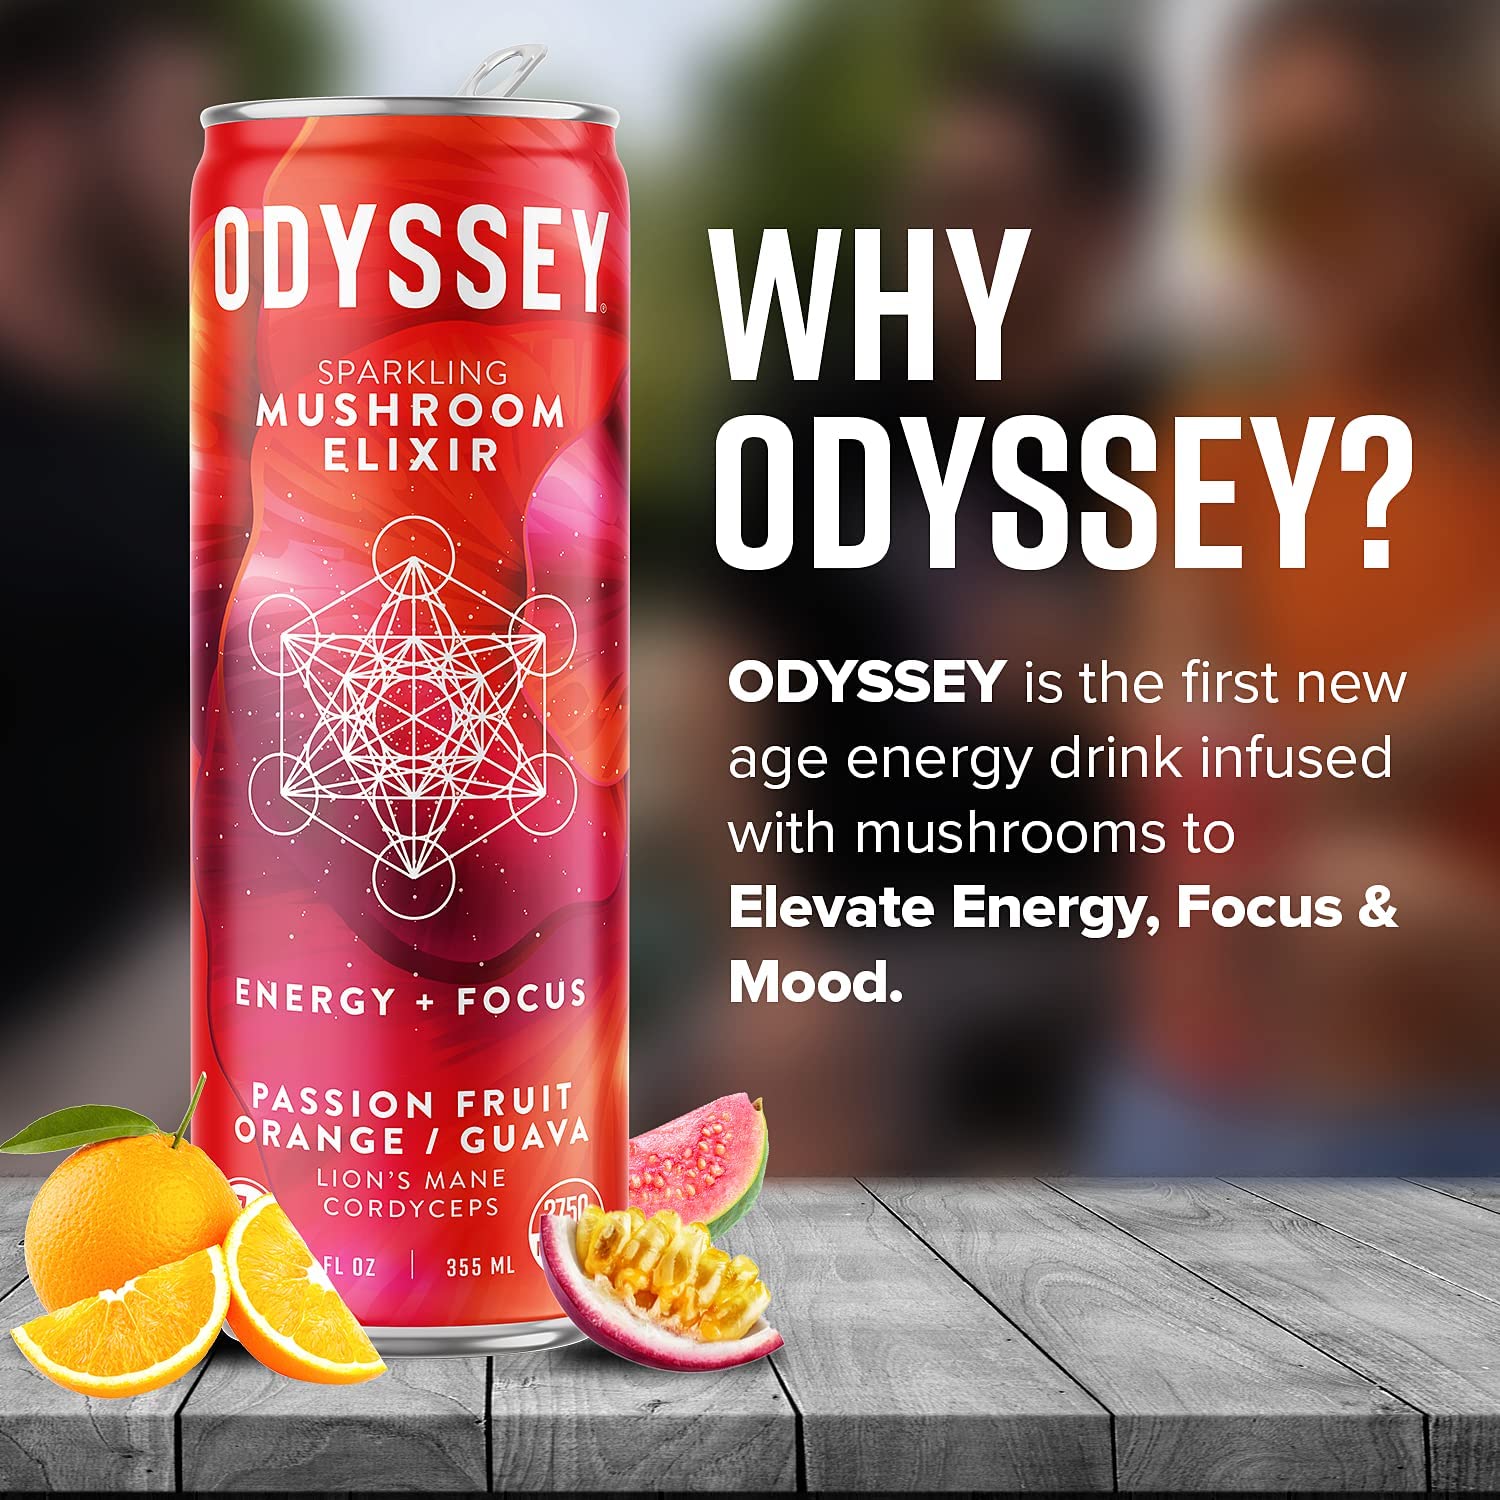 Odyssey Mushroom Elixir: Passion Fruit Orange Guava Energy Drink